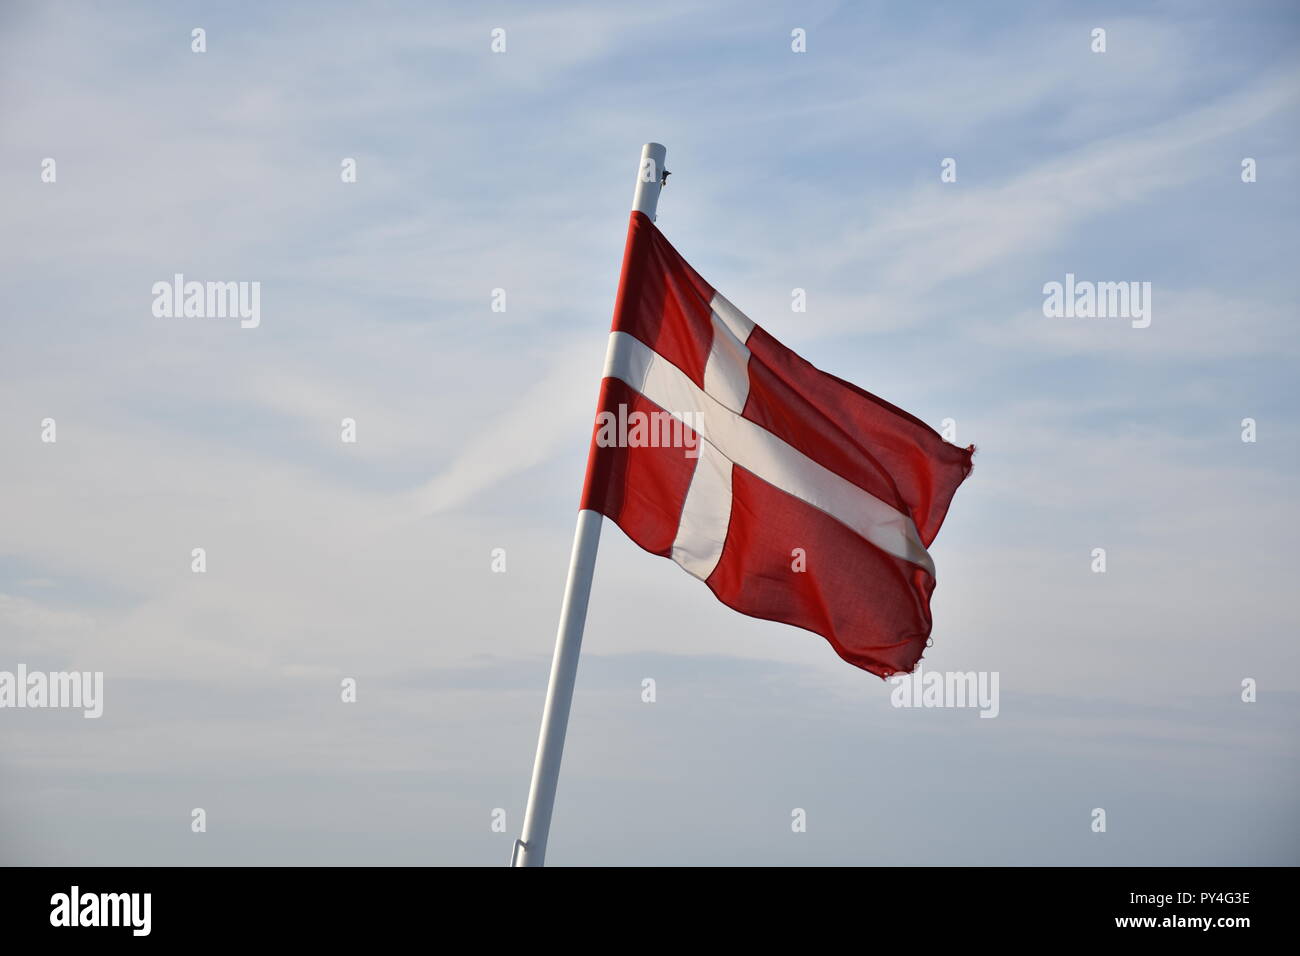 Fahne, Flagge, Dänemark, dänisch, Land, Danneborg, Daneborg, Tuch, Landesfahne, Nation, Nationalflagge, Wehen, Wind, Wolken, Meer, Fähre, Autofähre, S Stock Photo